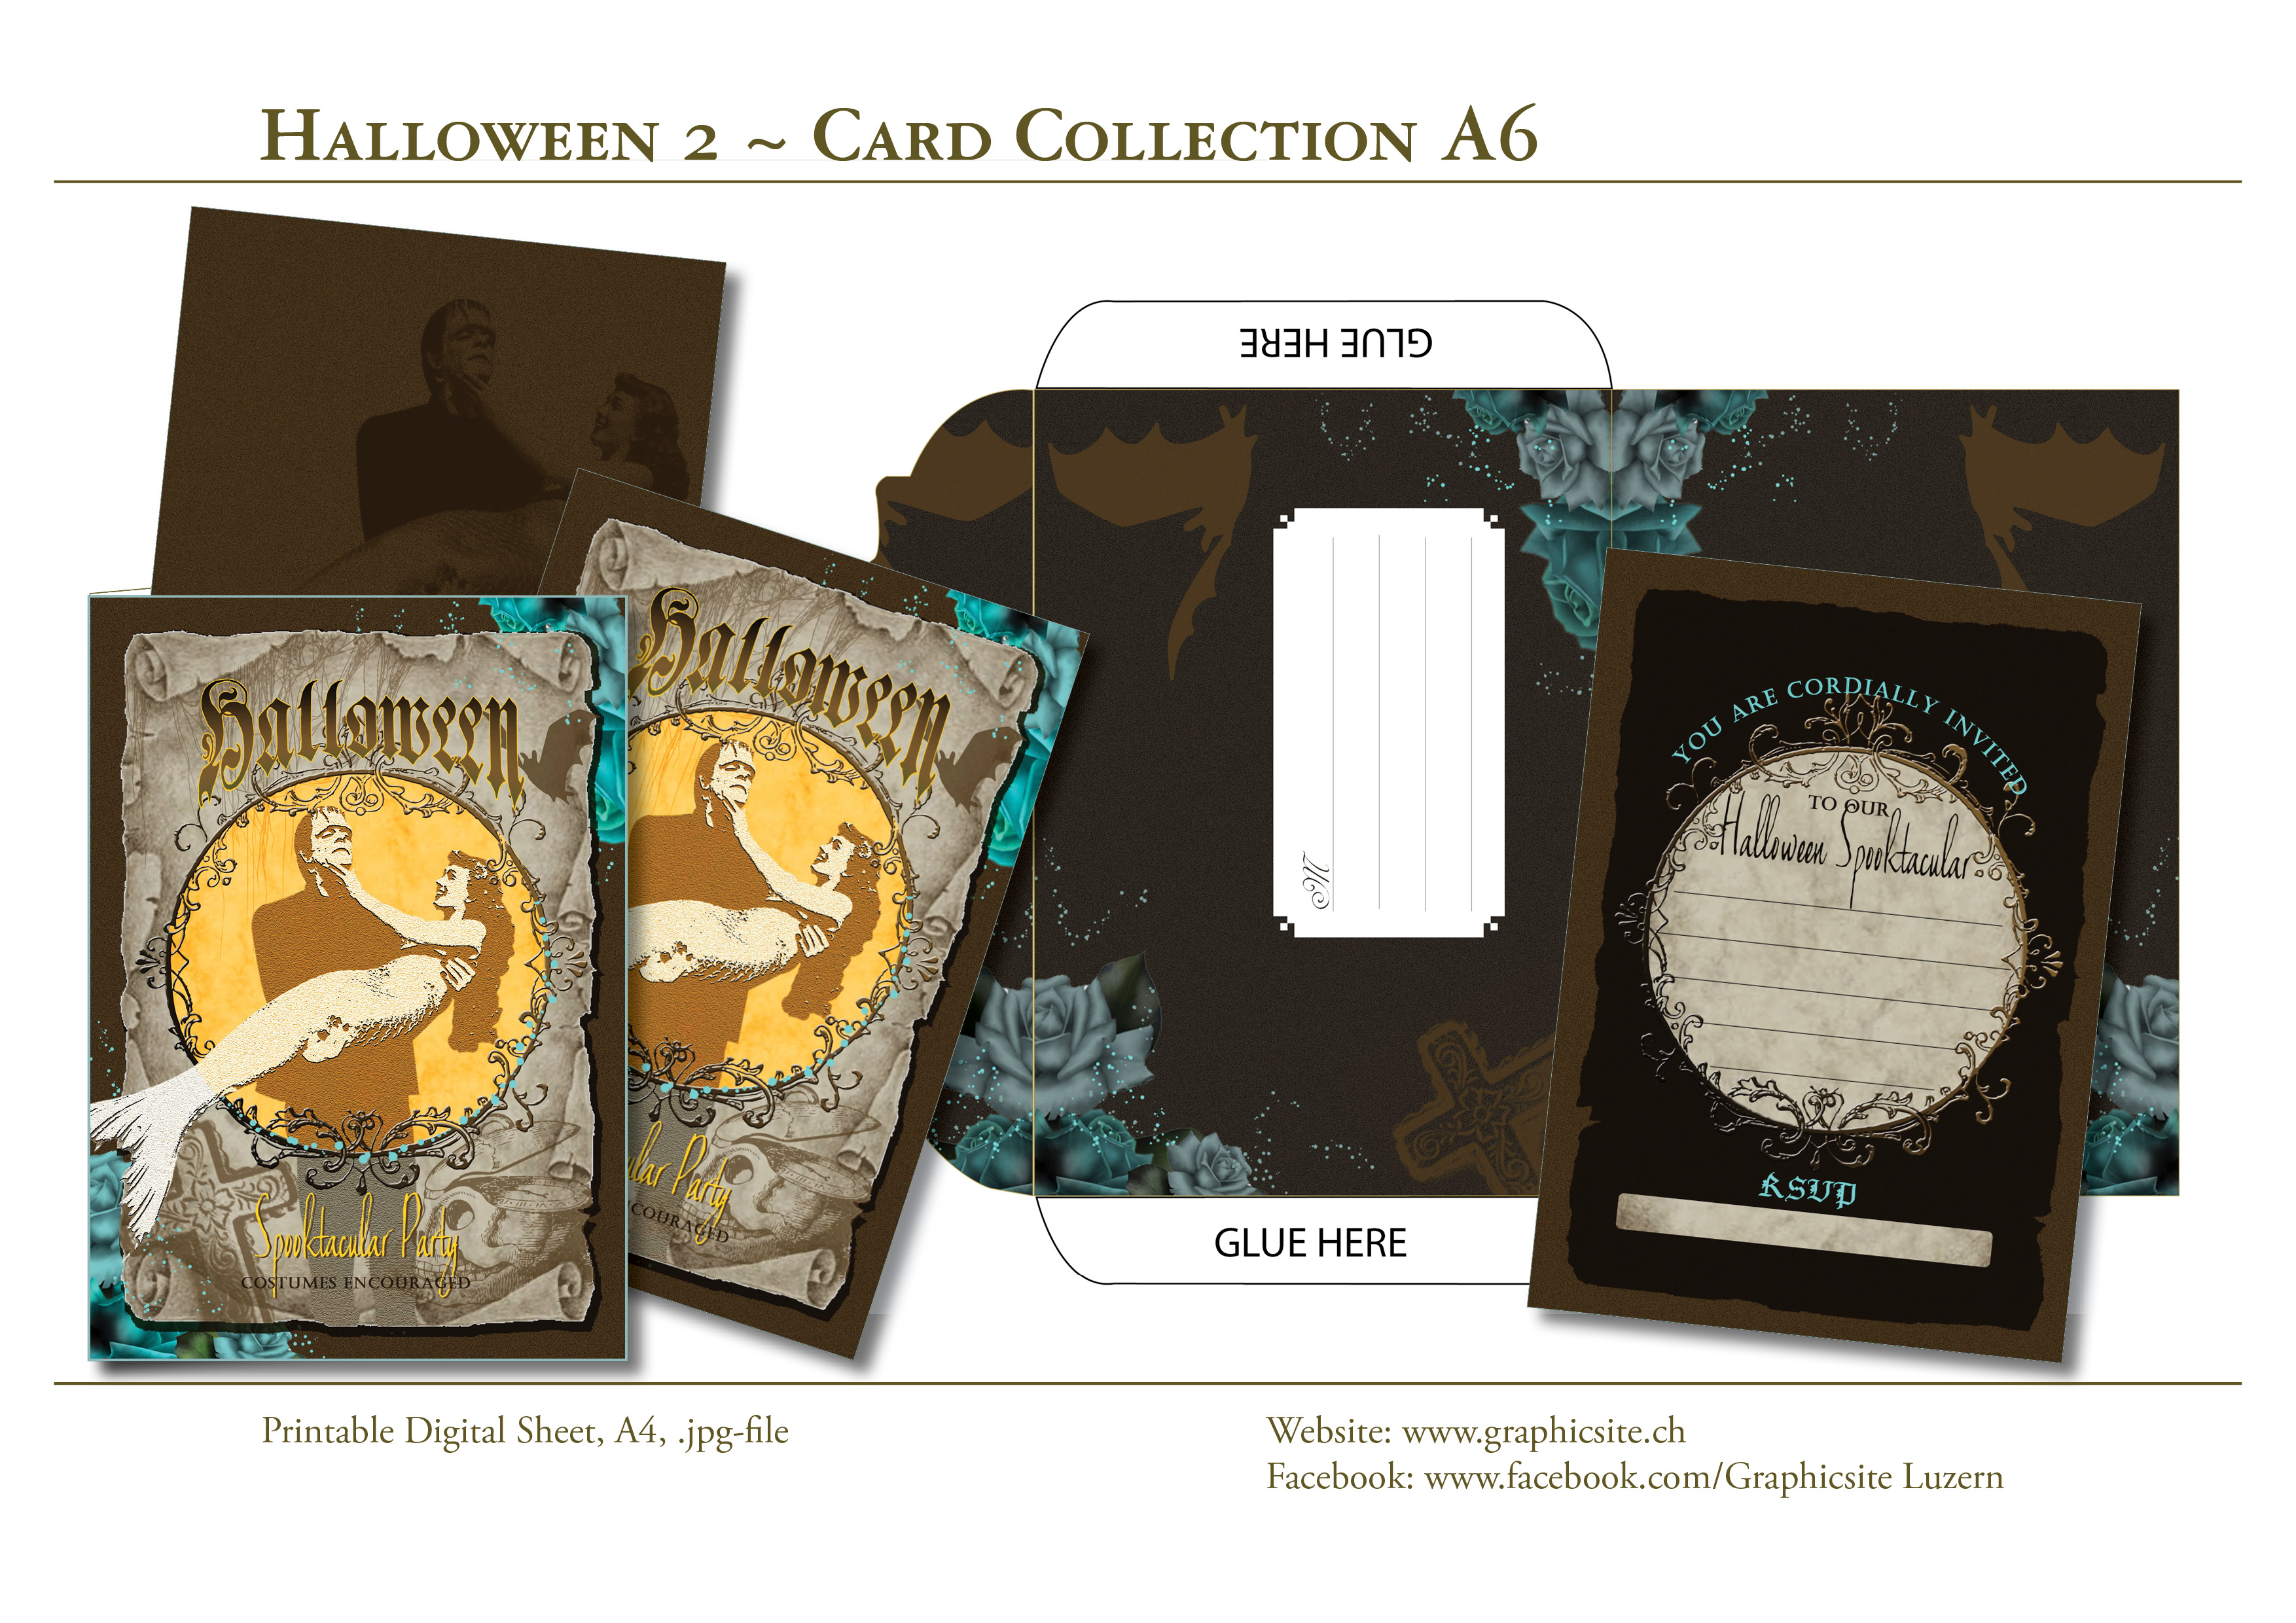 Printable Digital Sheets - DIN A - Halloween Card Collection, Spooktacular, Graphic Design, Luzern, Schweiz